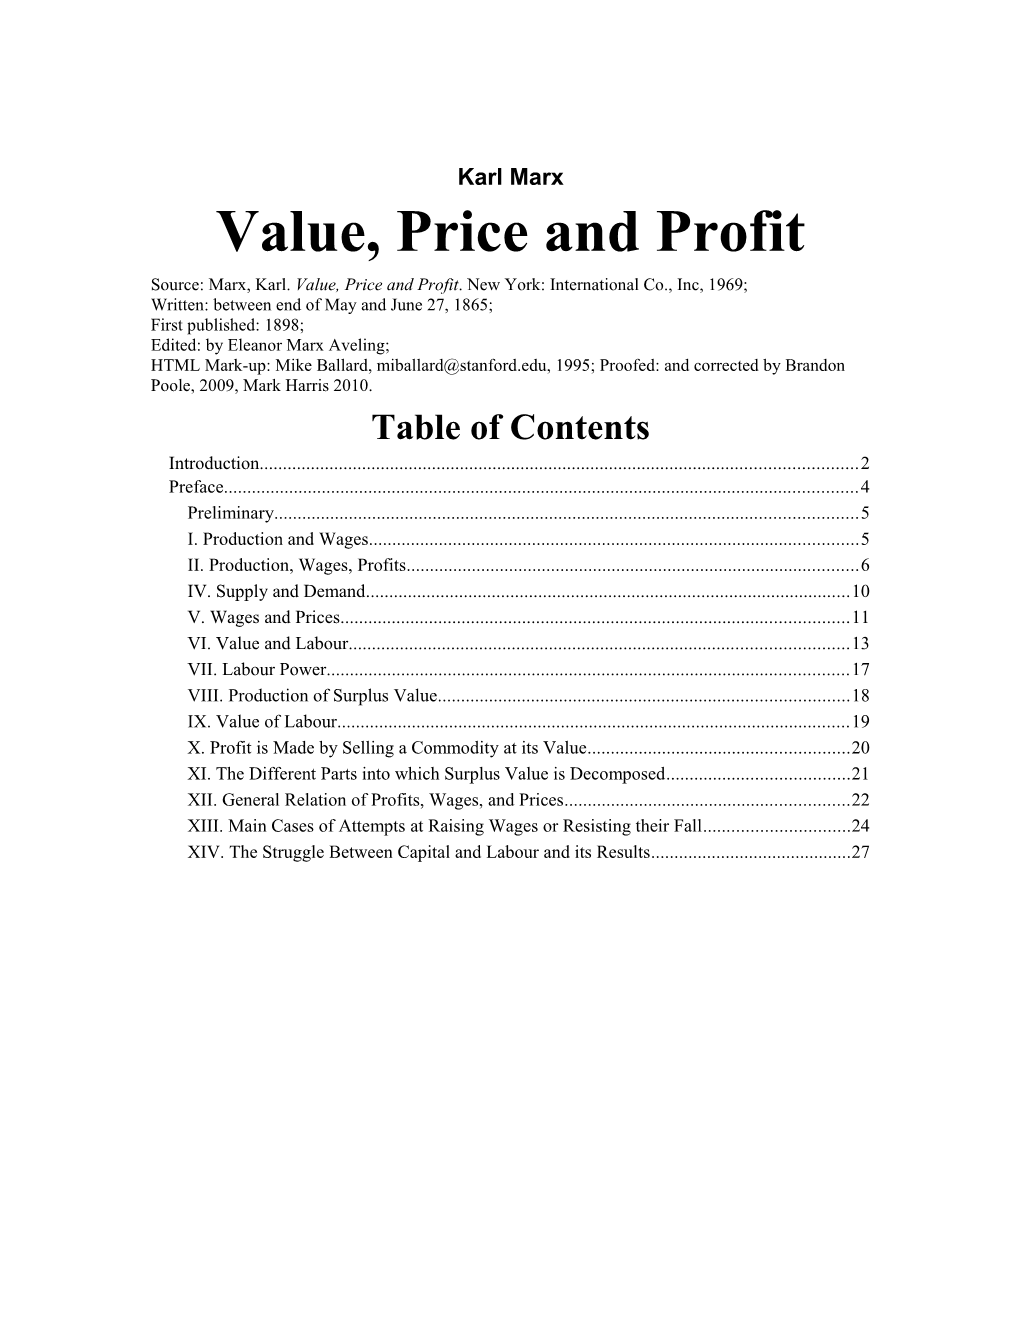 Value Price and Profit